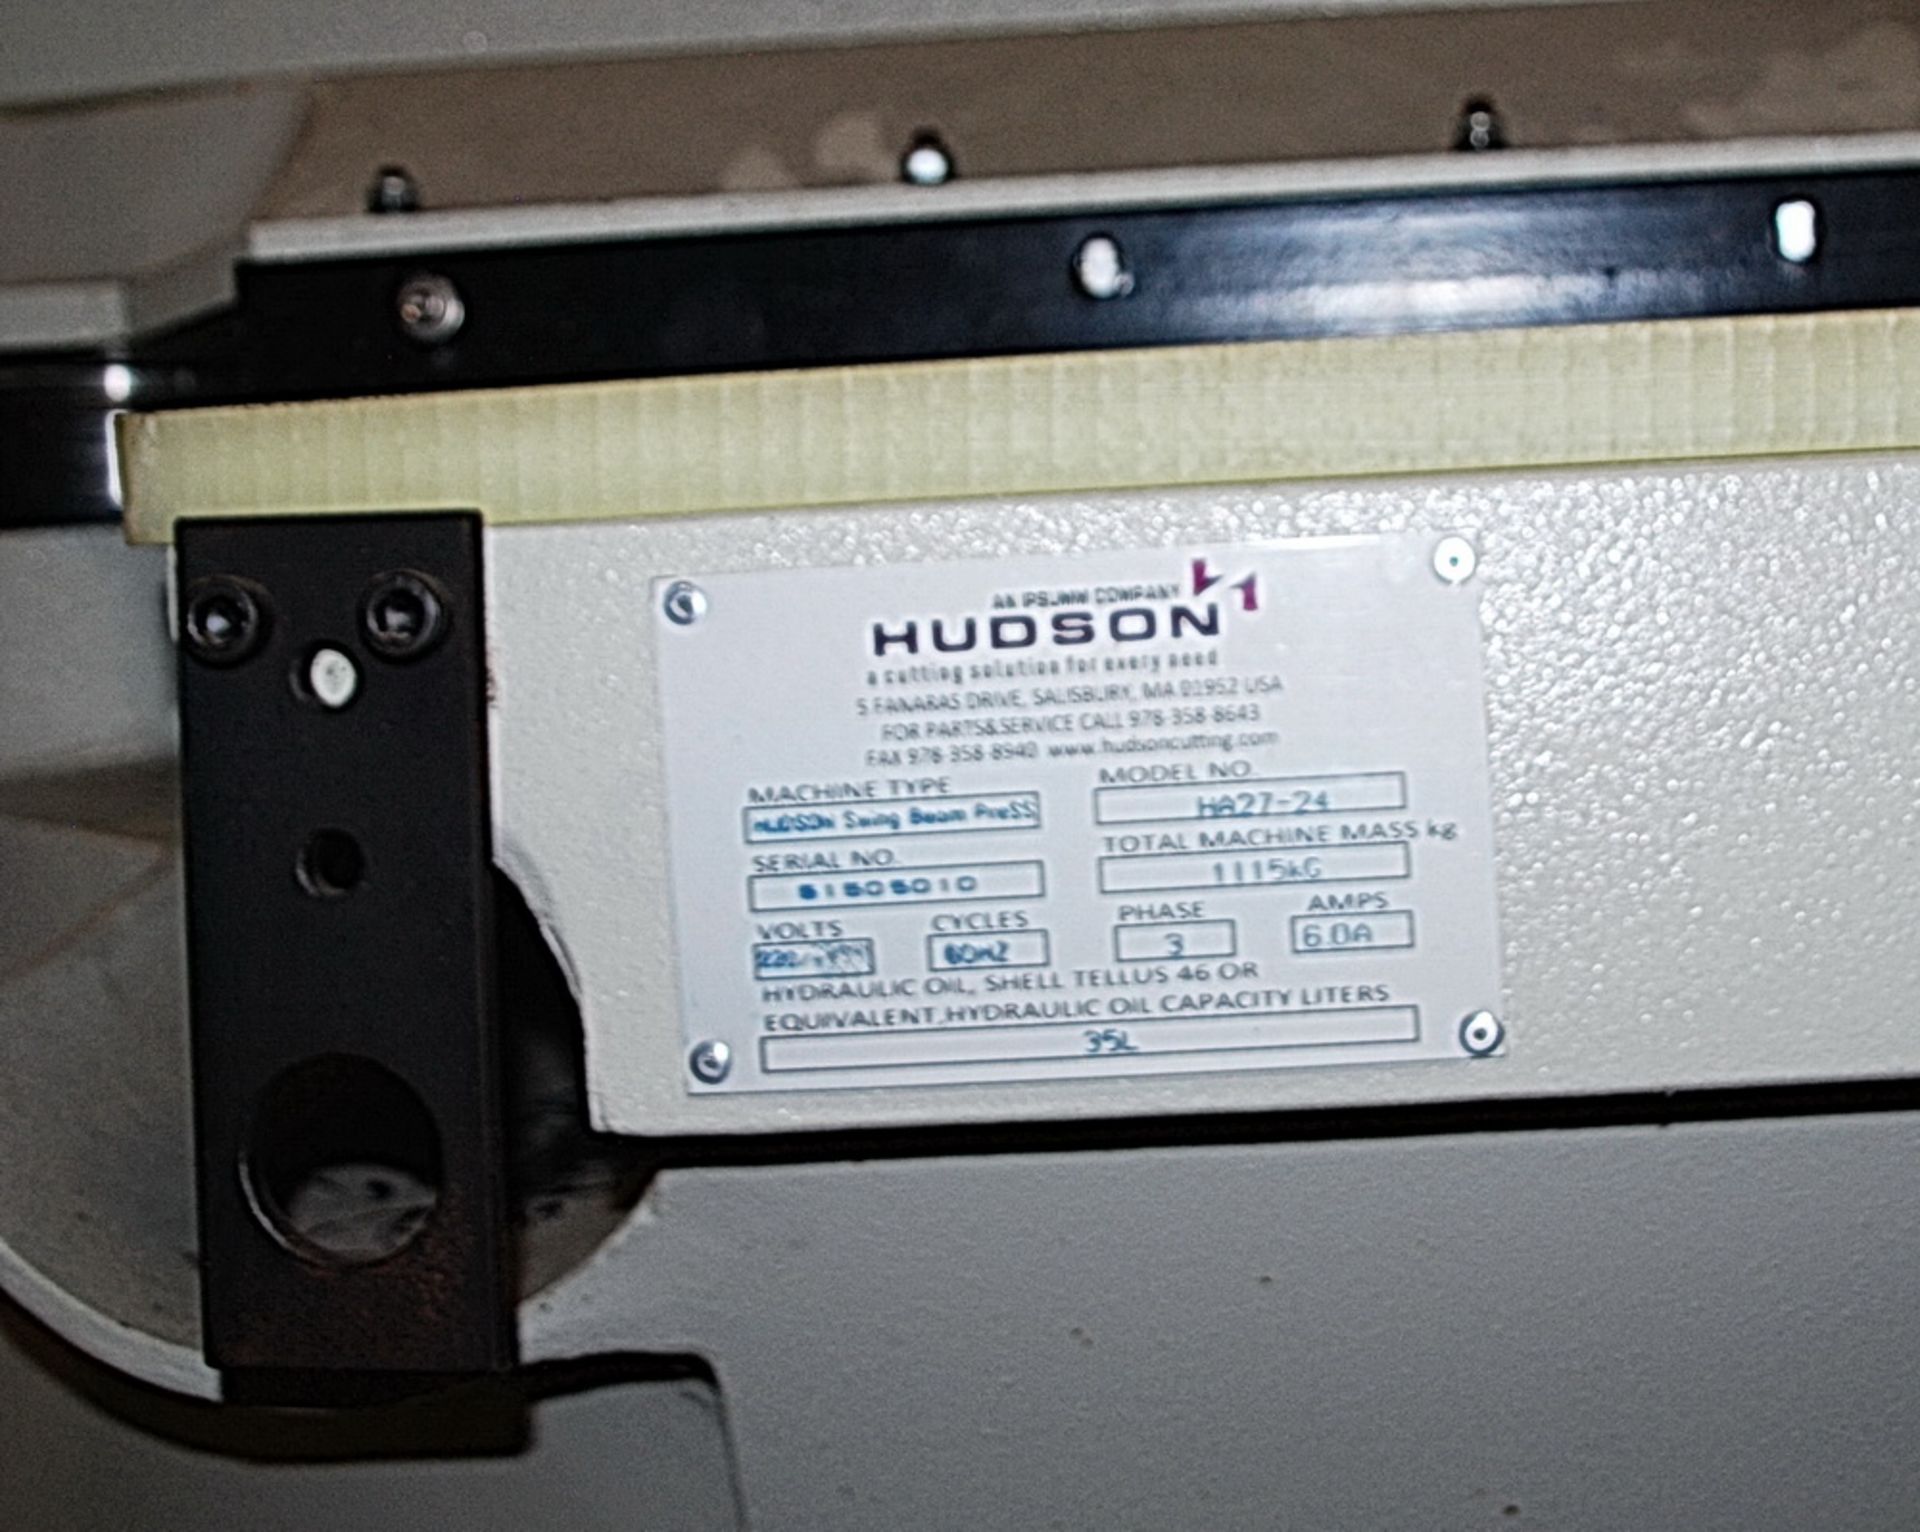 Hudson Clicker Press, Model HA27-24 - Image 3 of 3